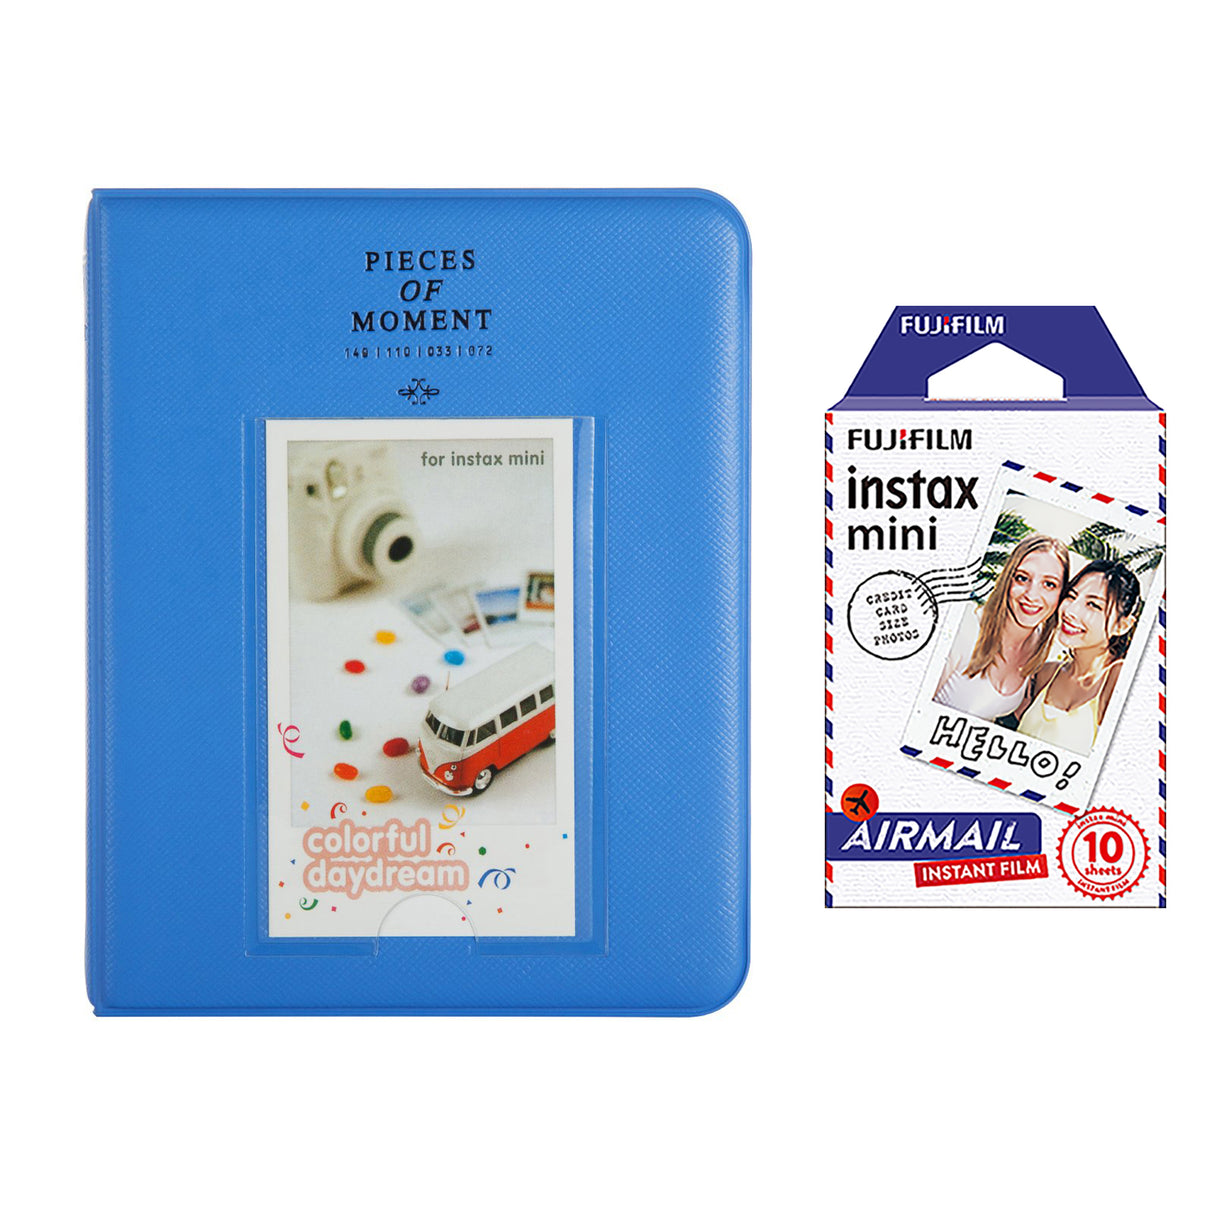 Fujifilm Instax Mini 10X1 airmail Instant Film with Instax Time Photo Album 64 Sheets Cobalt blue